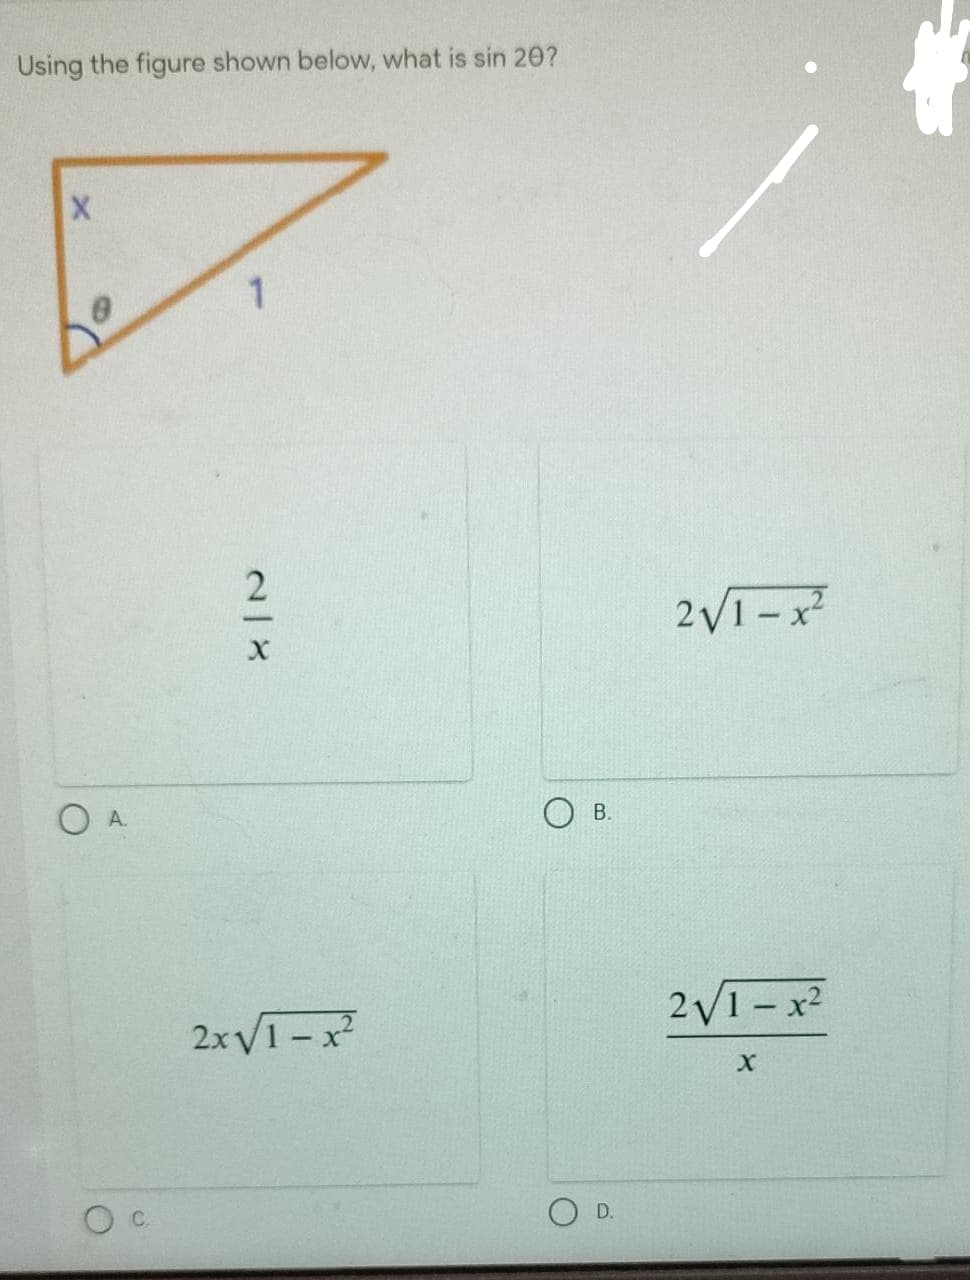 Using the figure shown below, what is sin 20?
2V1-x
O A.
В.
2V1-x2
2xV1-x
D.
